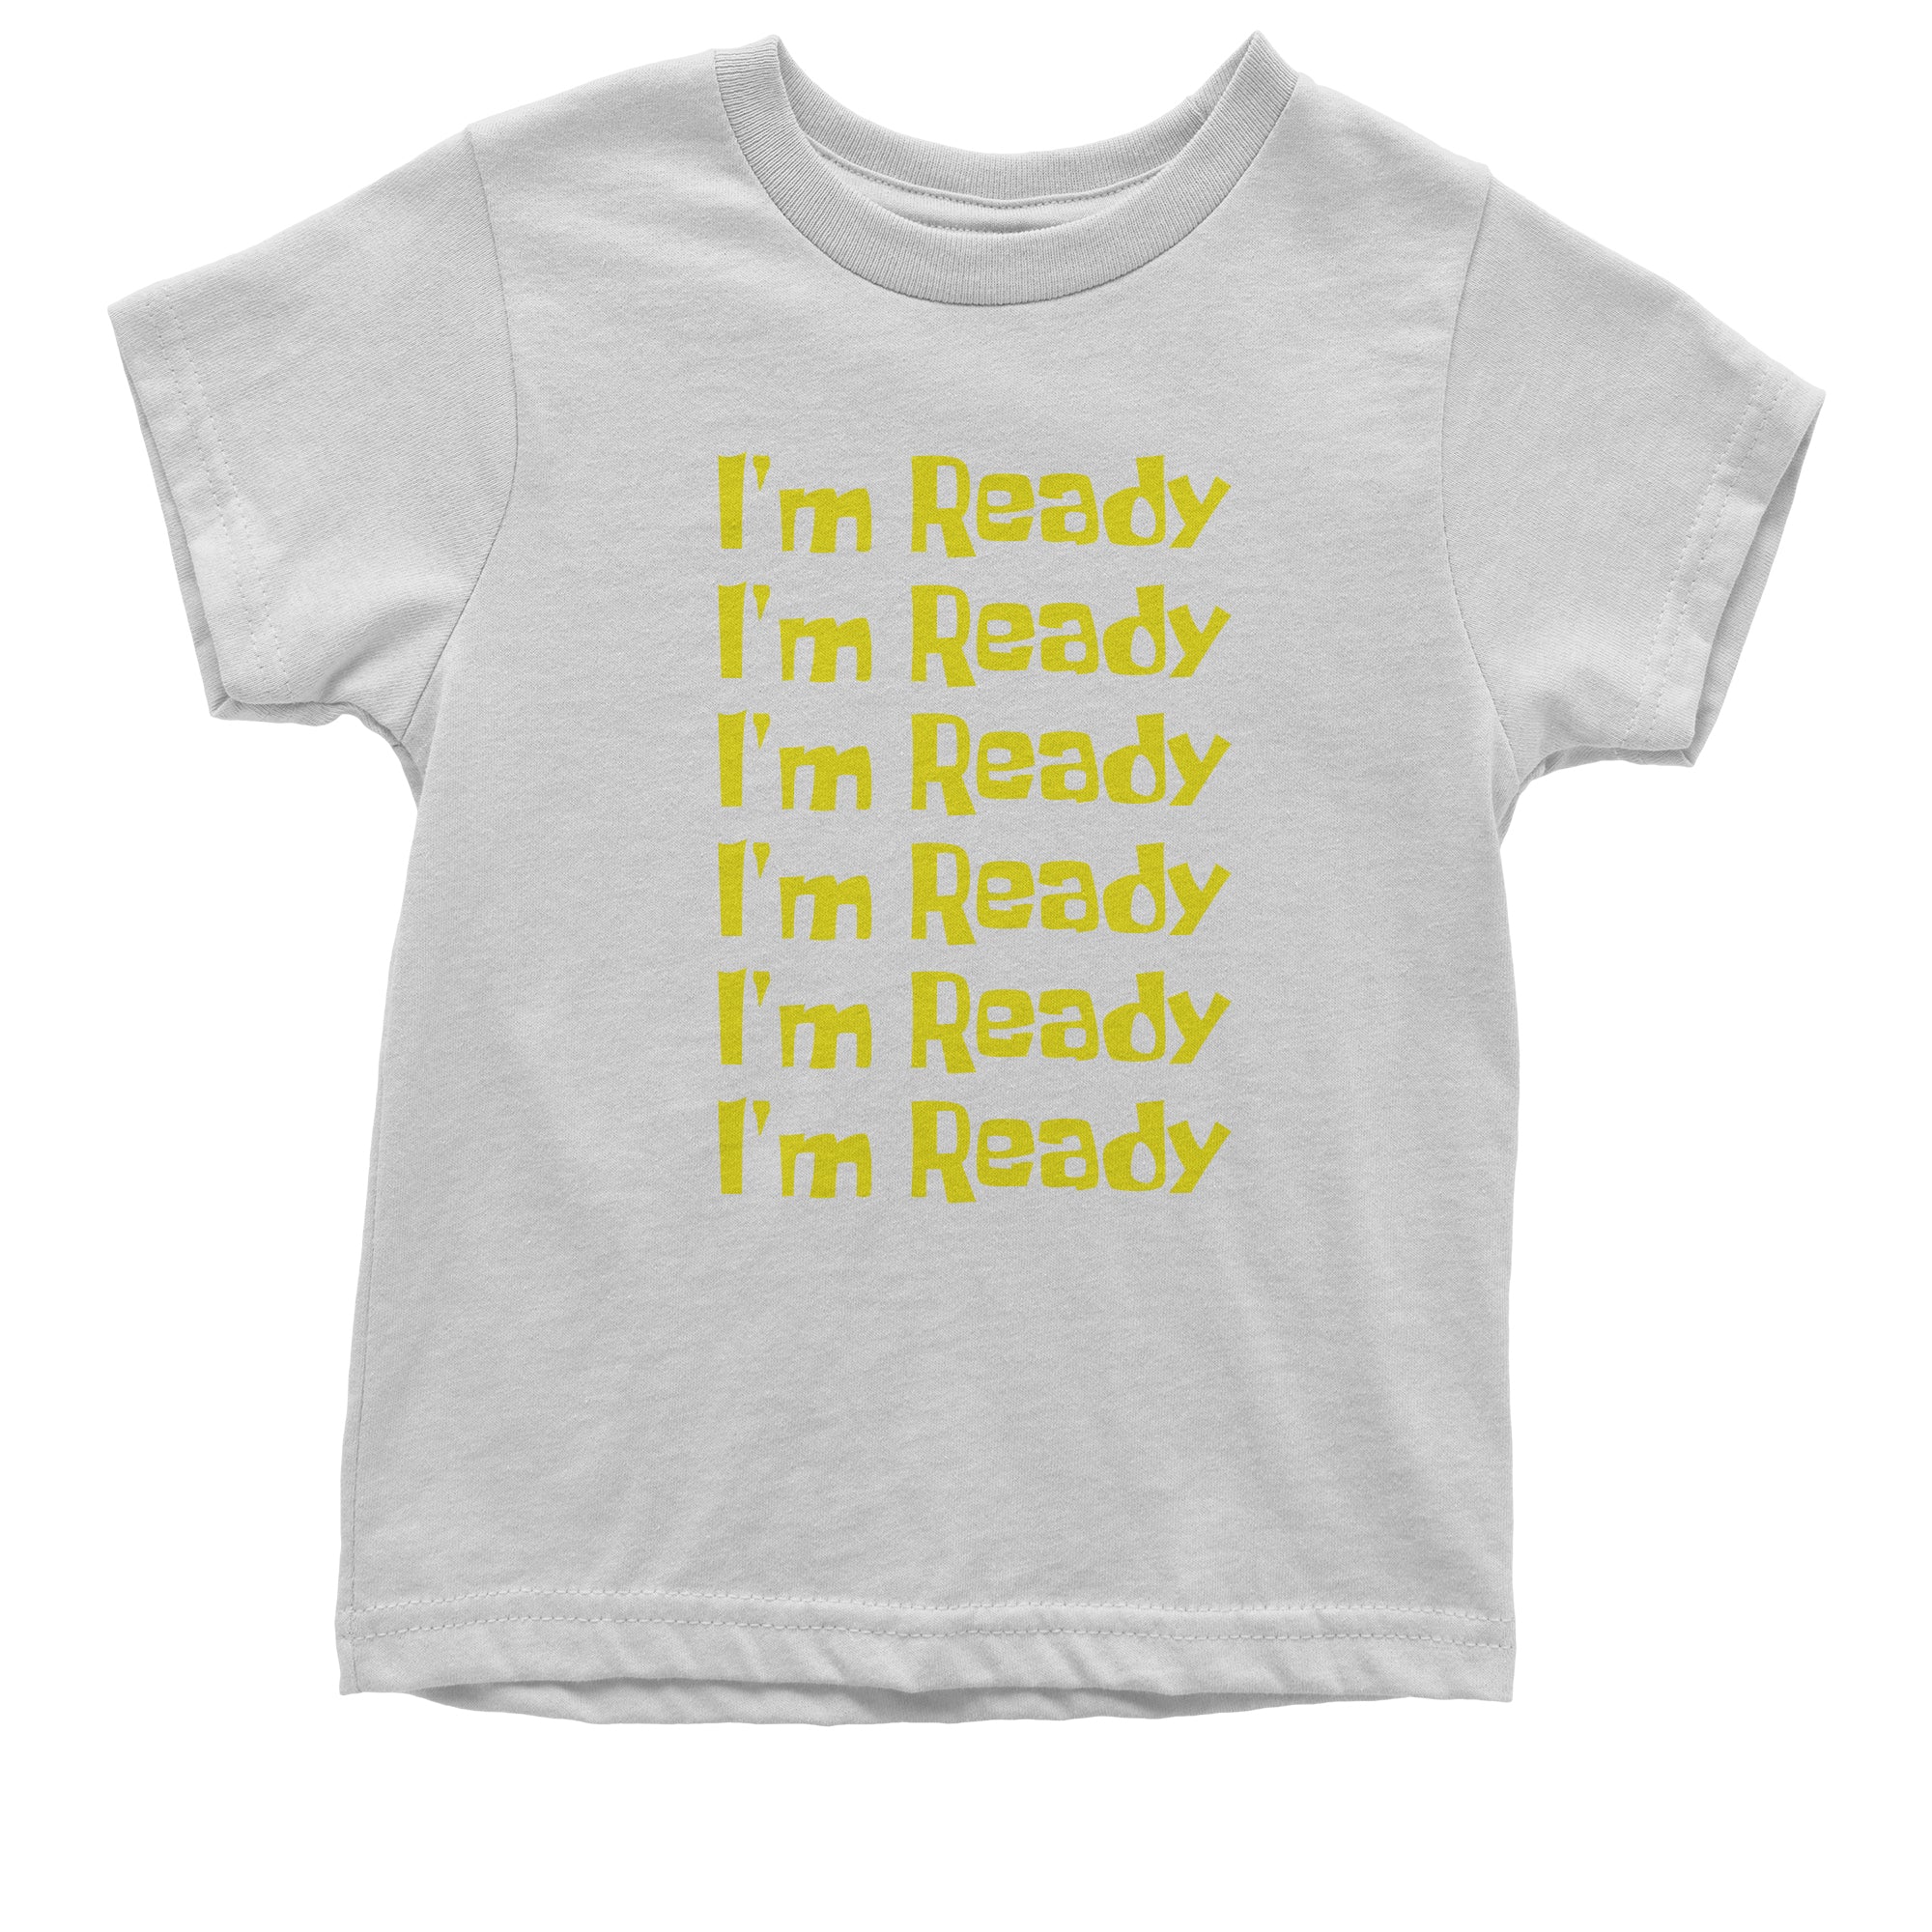 I'm Ready Funny Quote Catchphrase Spongebobble Kid's T-Shirt